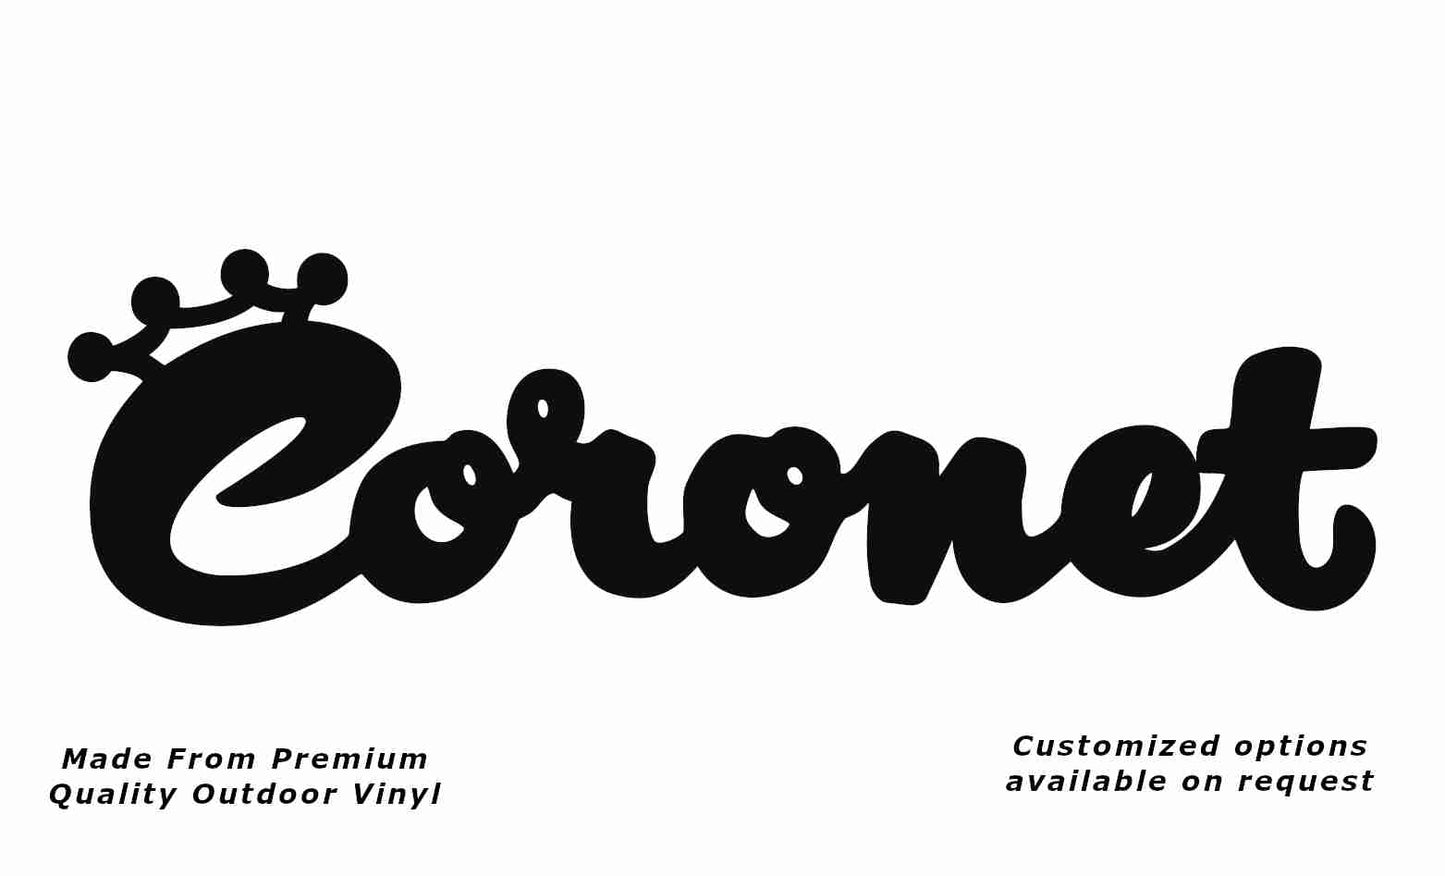 Coronet plain caravan replacement vinyl decal sticker in black.